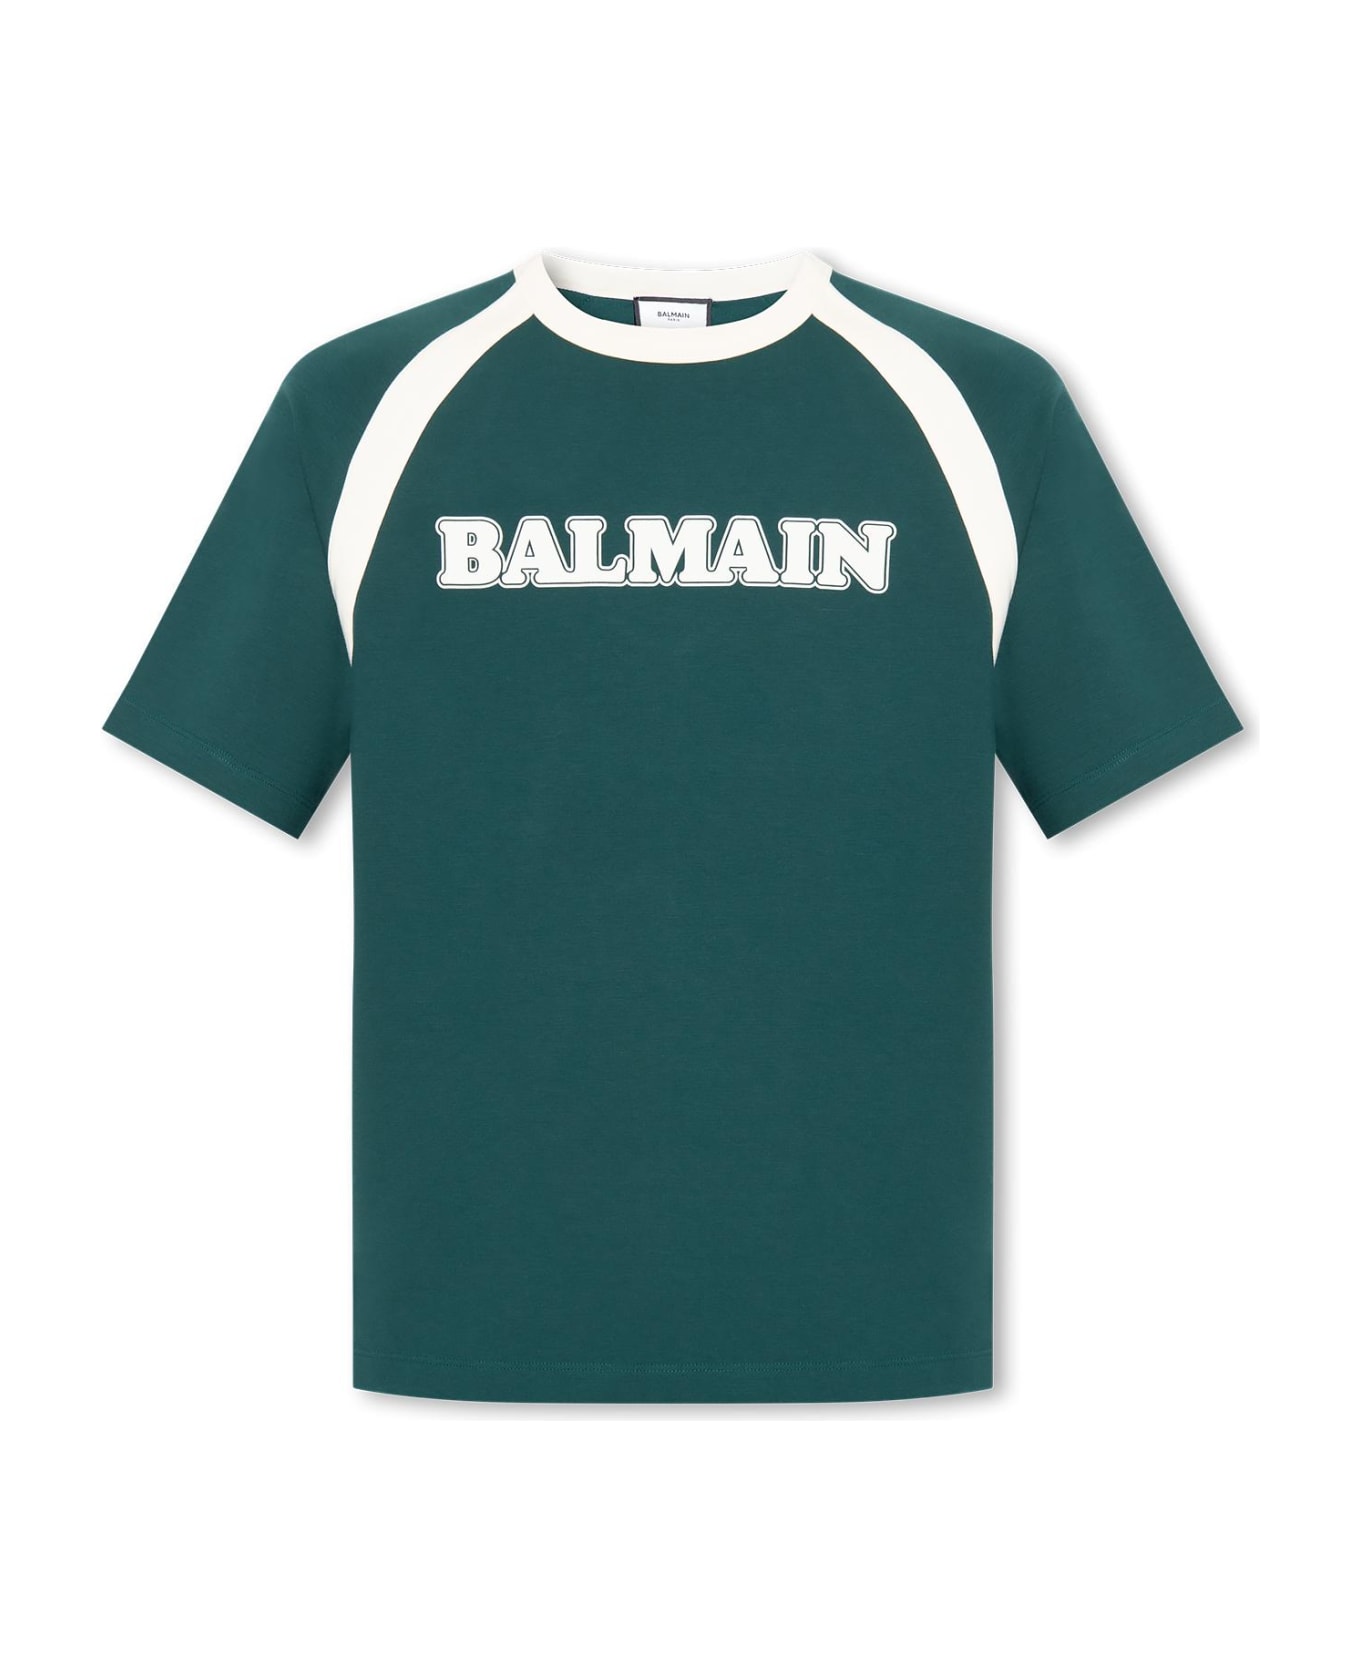 Balmain Printed T-shirt - Vert fonce\creme シャツ